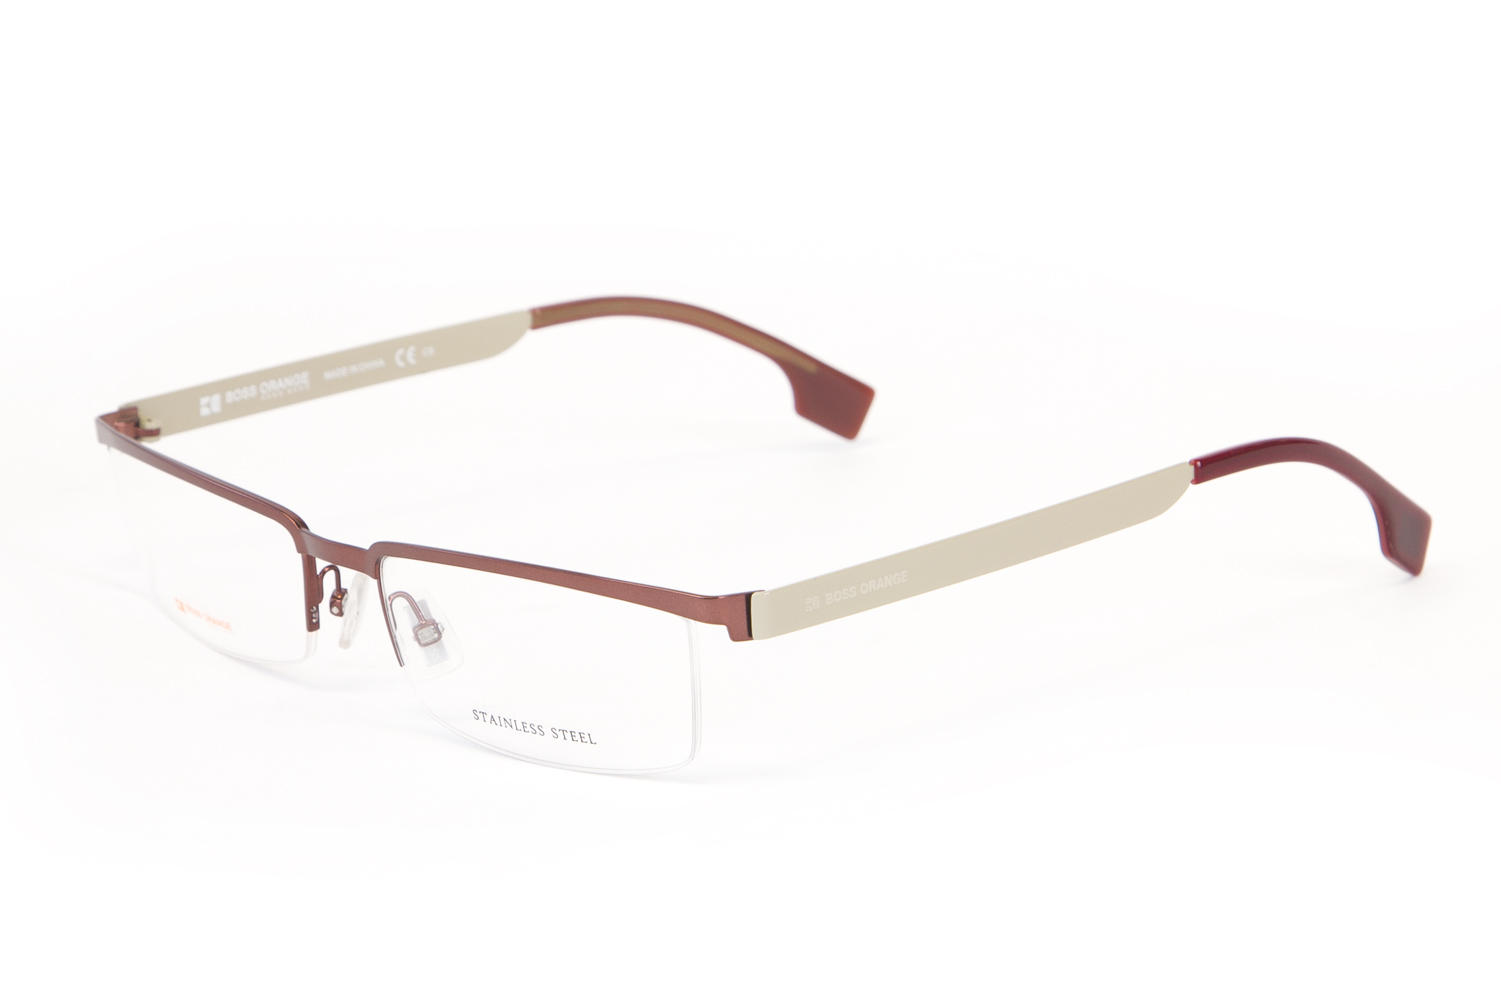 Boss Orange Stainless Steel Semi-Rimless Eyeglass Frames 54mm Burgundy Mud - image 1 of 3